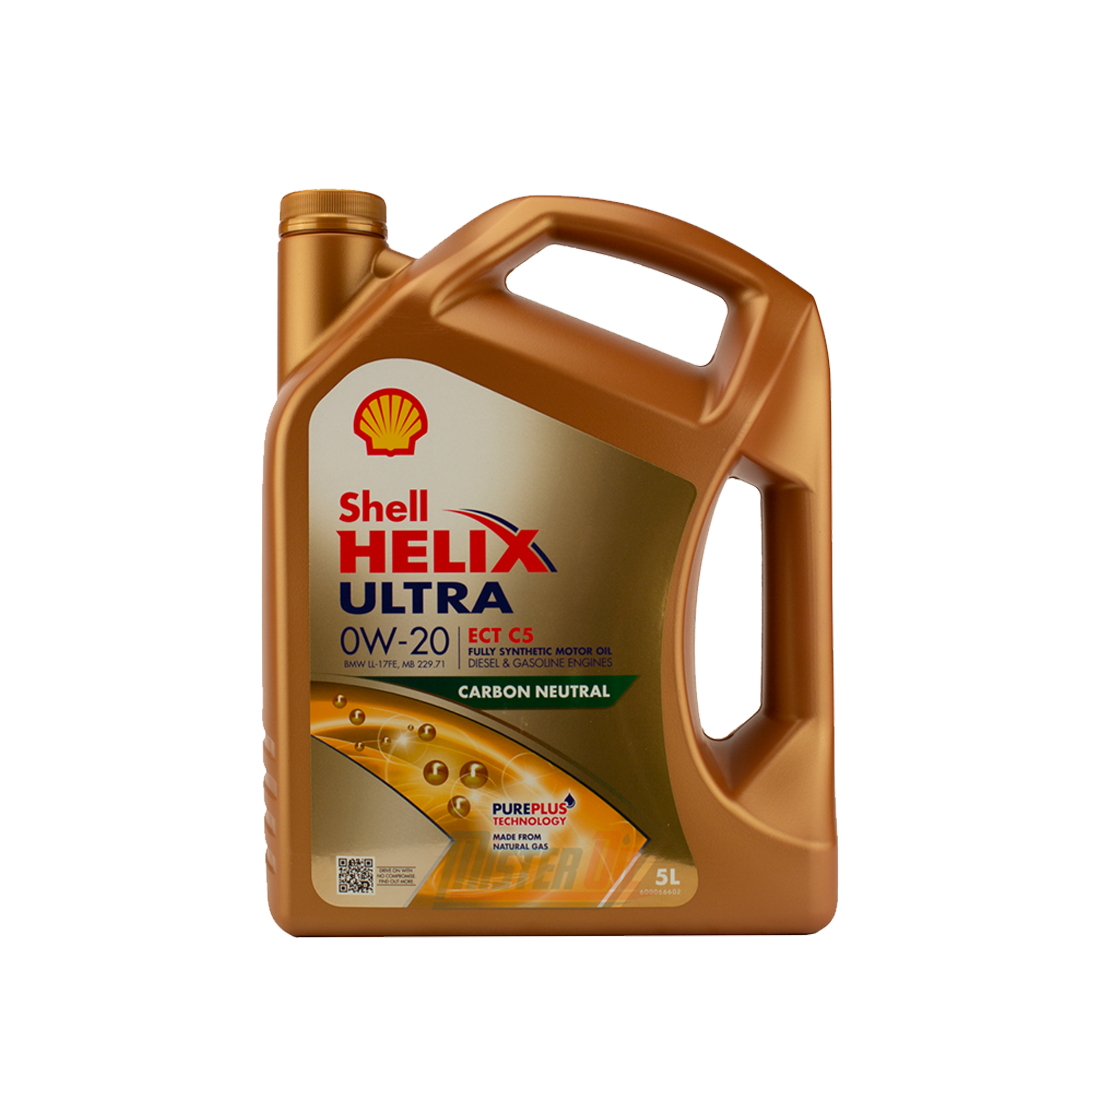 Shell Helix Ultra ECT C5 0W-20, 5L